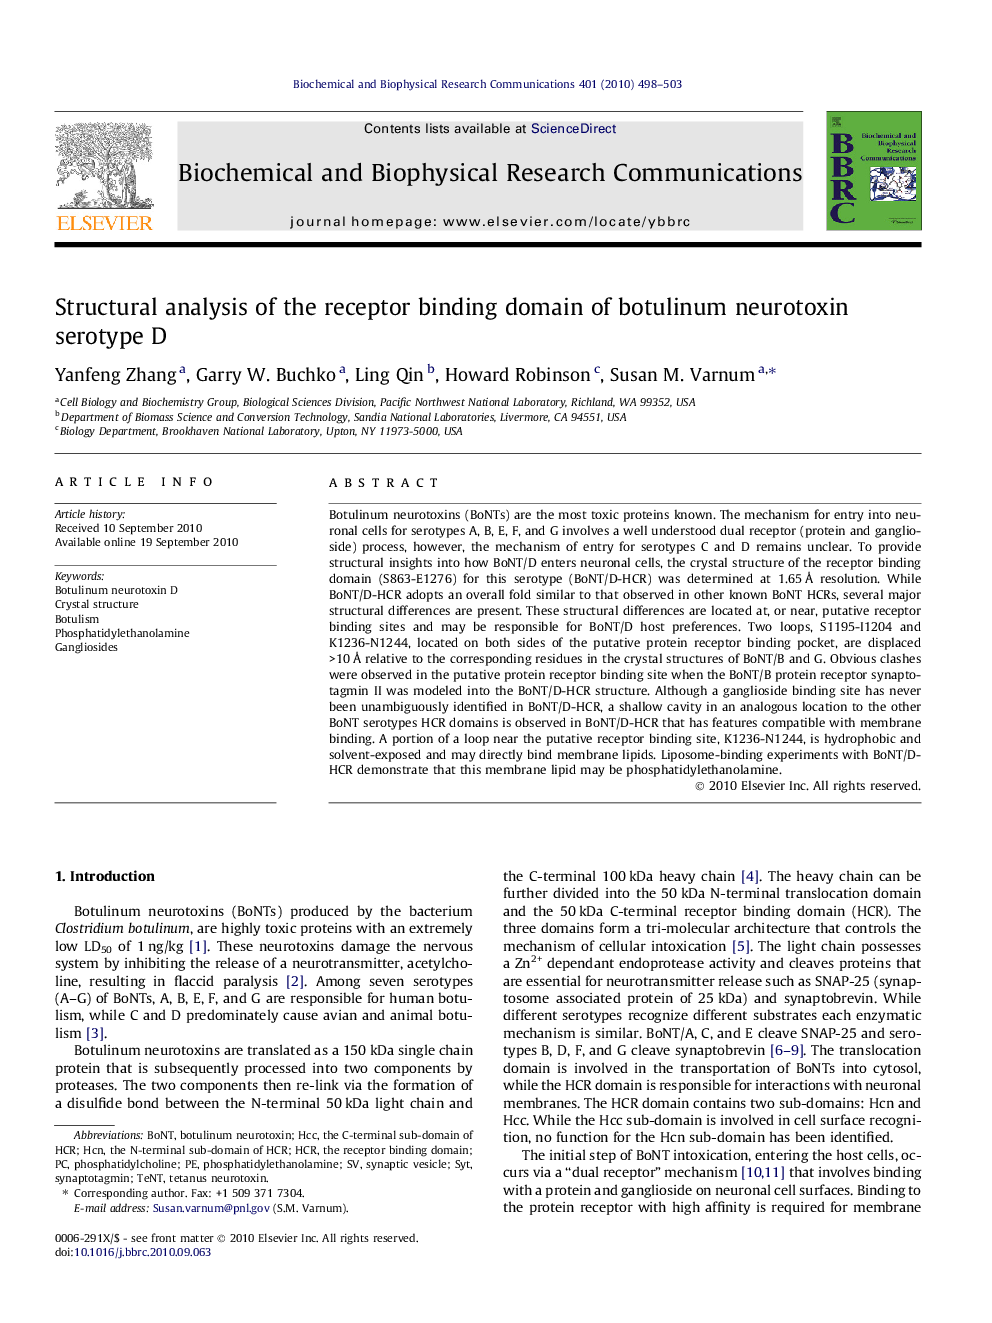 Structural analysis of the receptor binding domain of botulinum neurotoxin serotype D